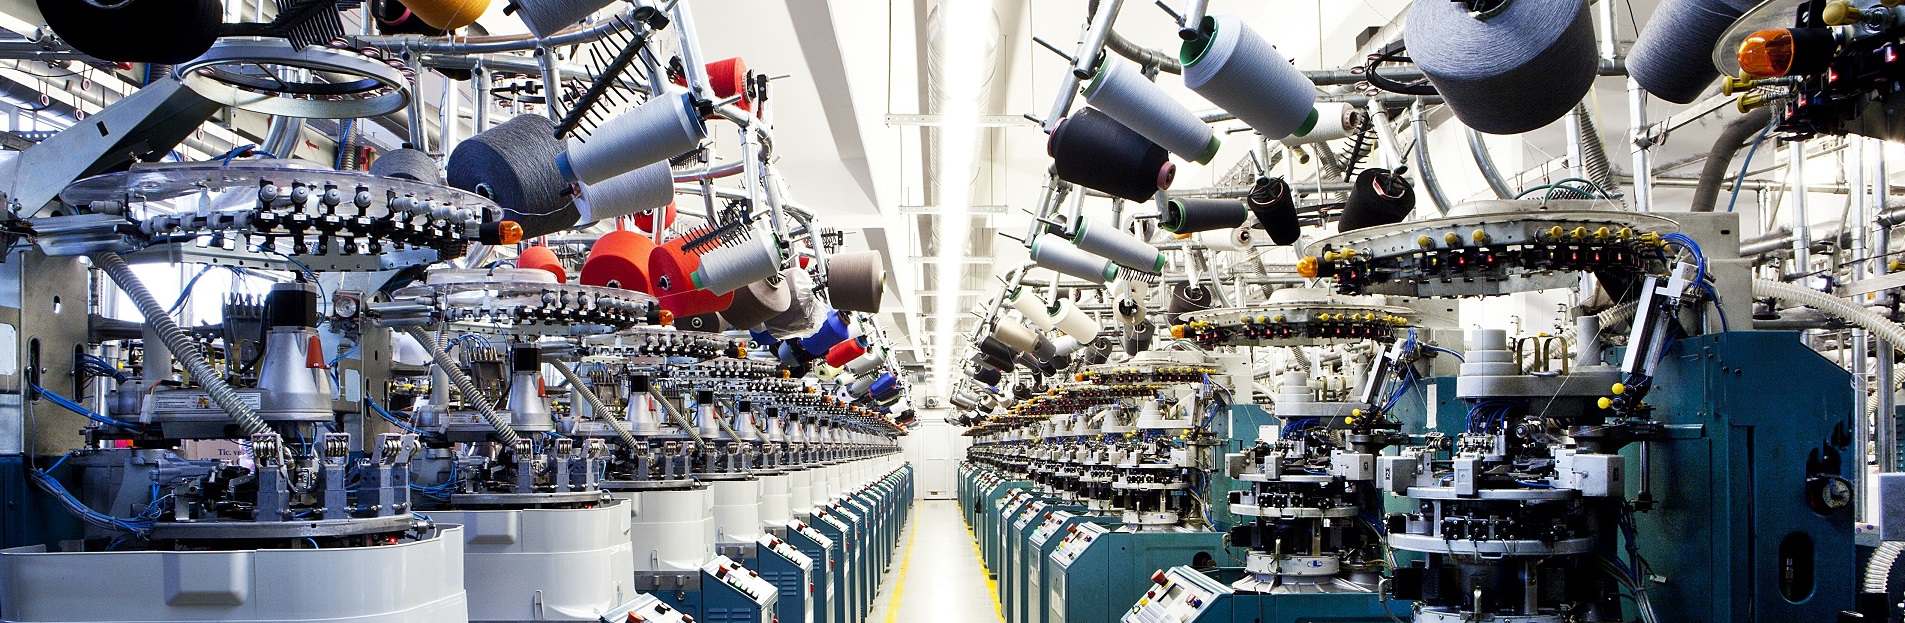 sock factory knitting machine producing image